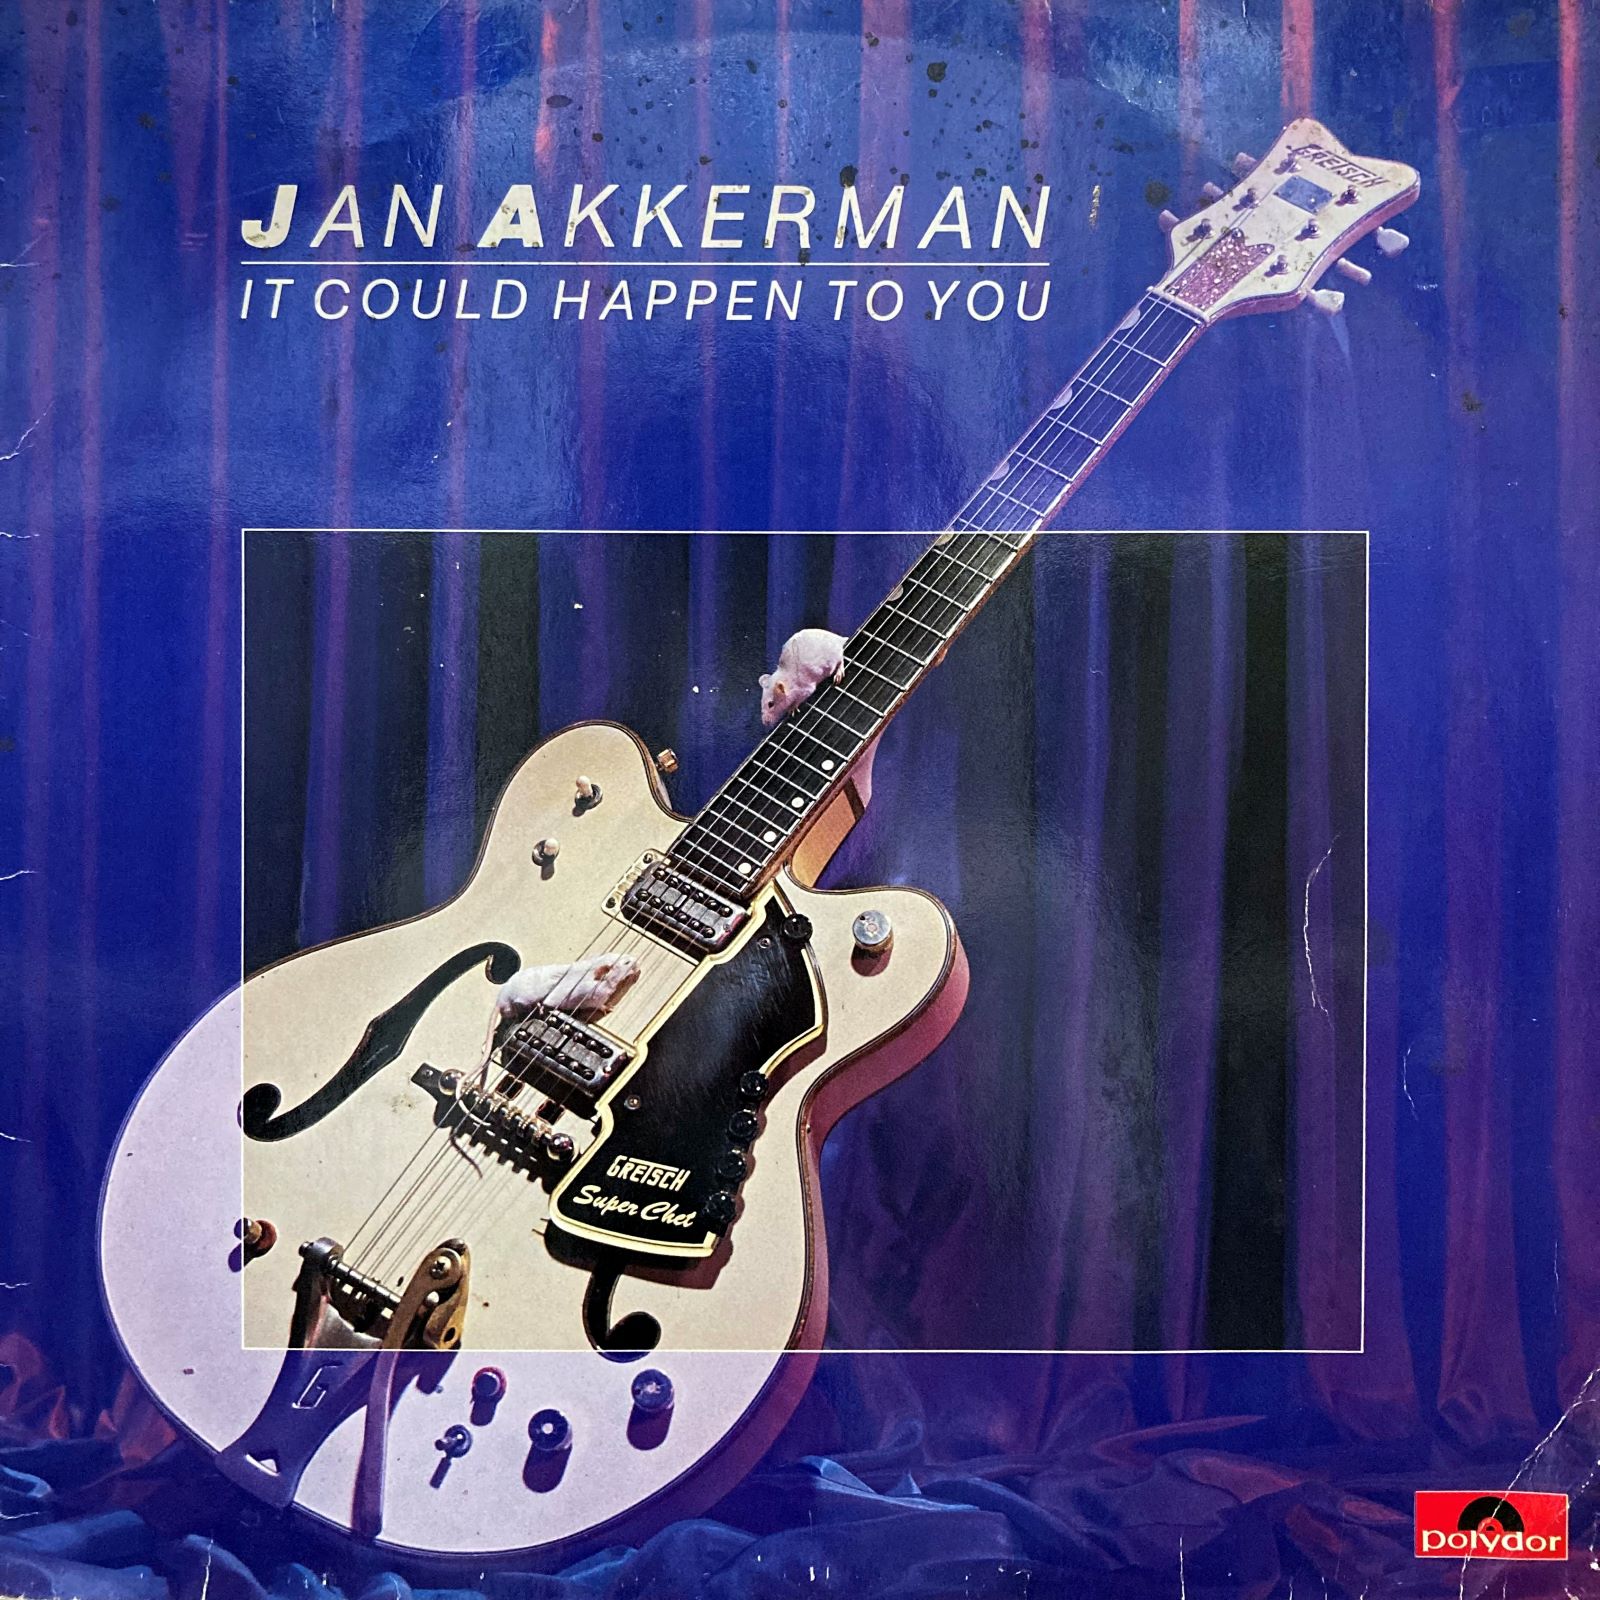 T could happen to you. Jan Akkerman. Jan Akkerman альбомы. Обложка для mp3 Jan Akkerman. Jan Akkerman young.